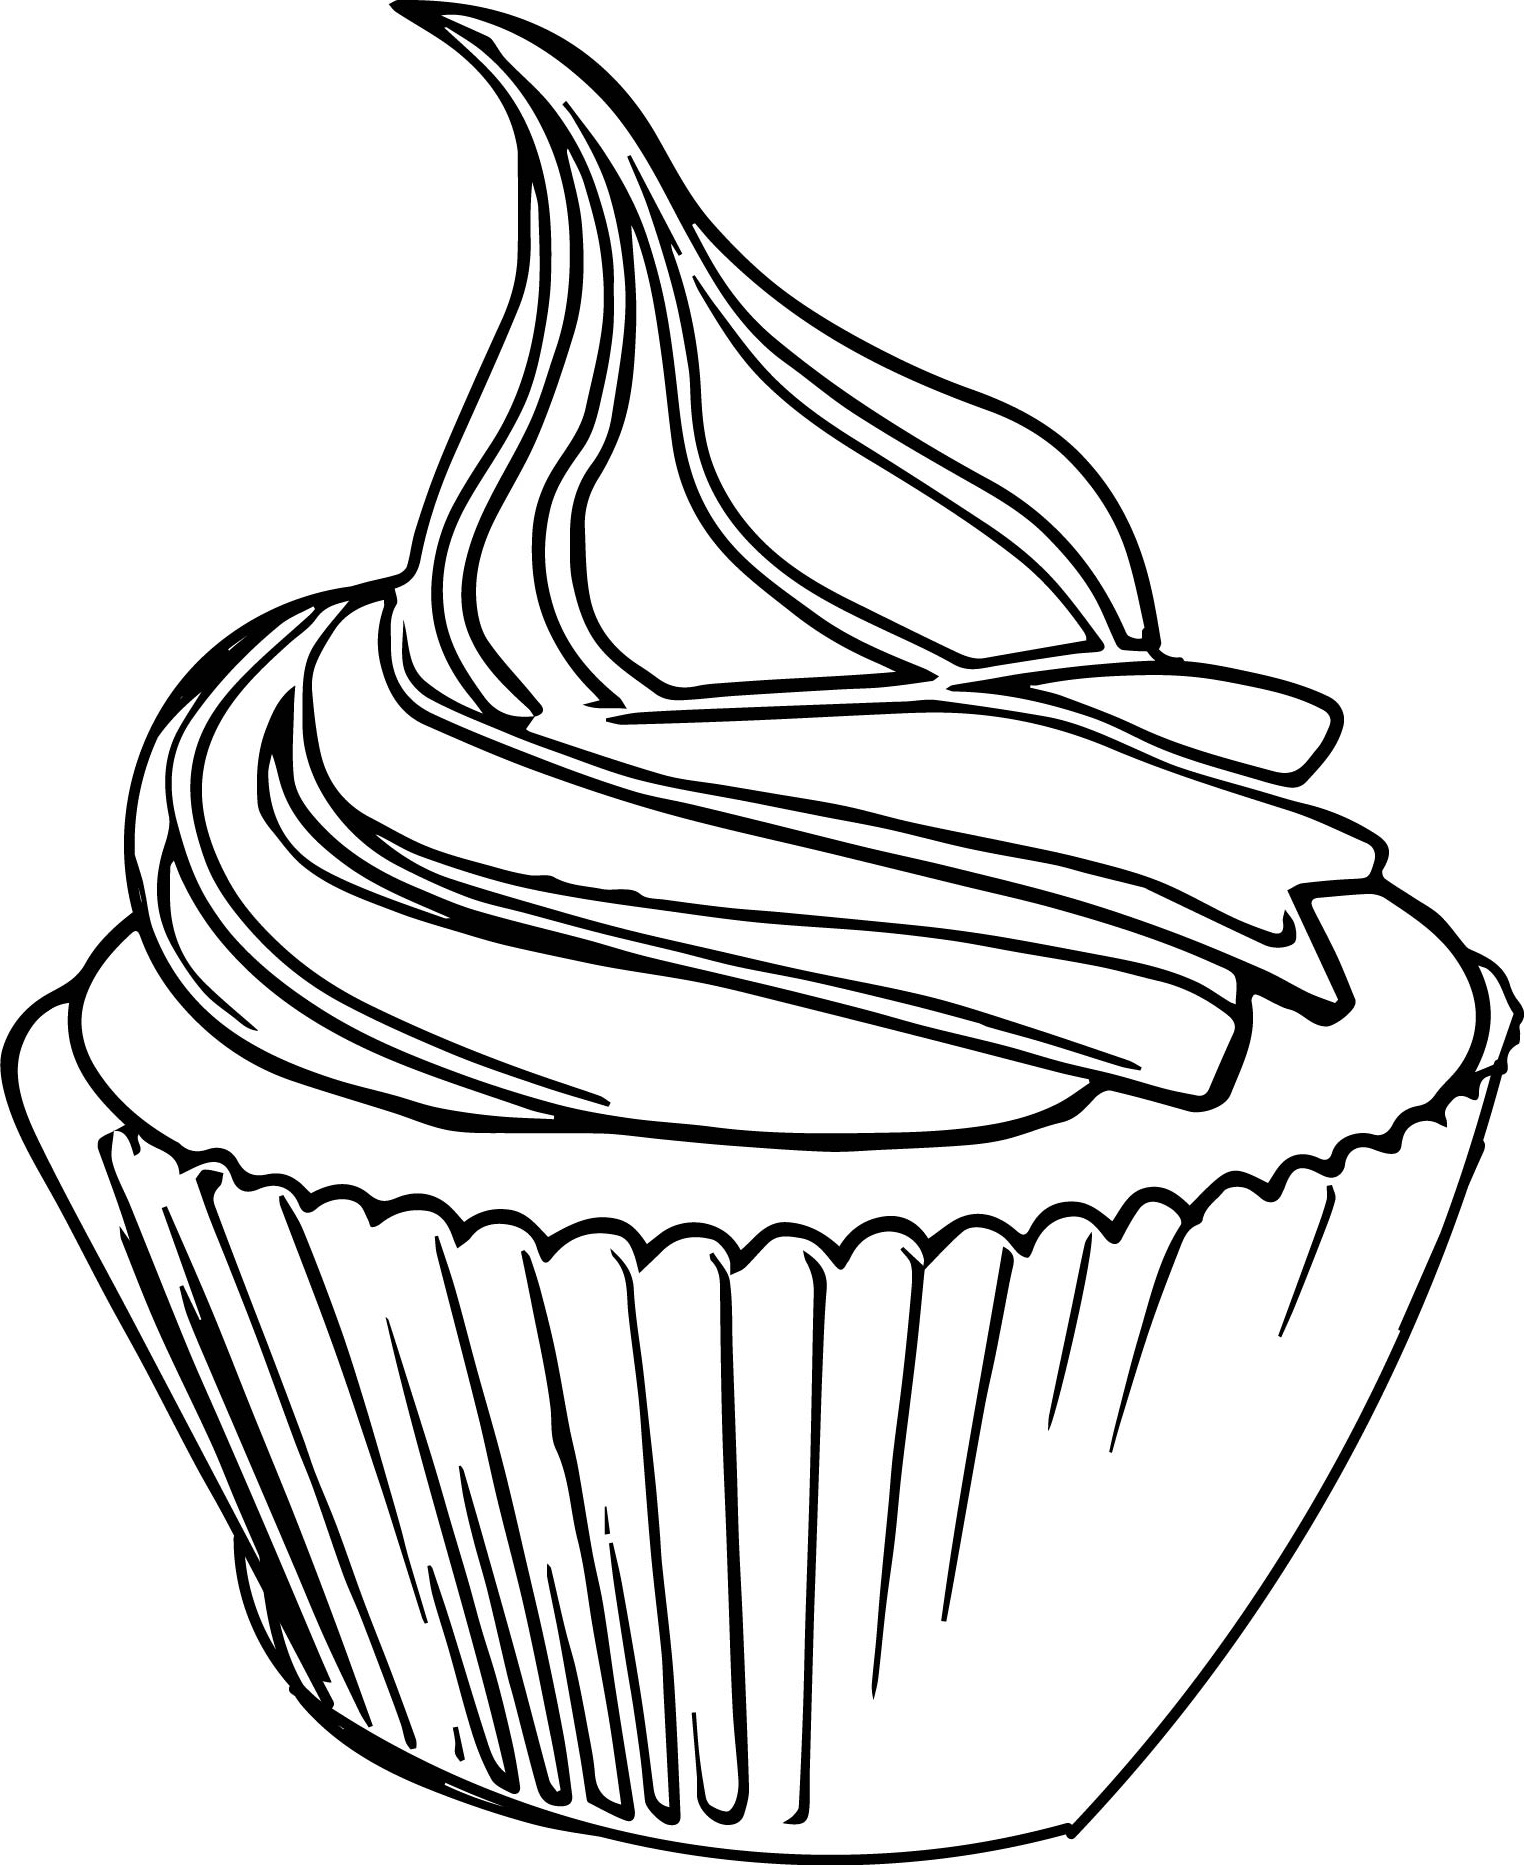 coloriage cupcake et dessin